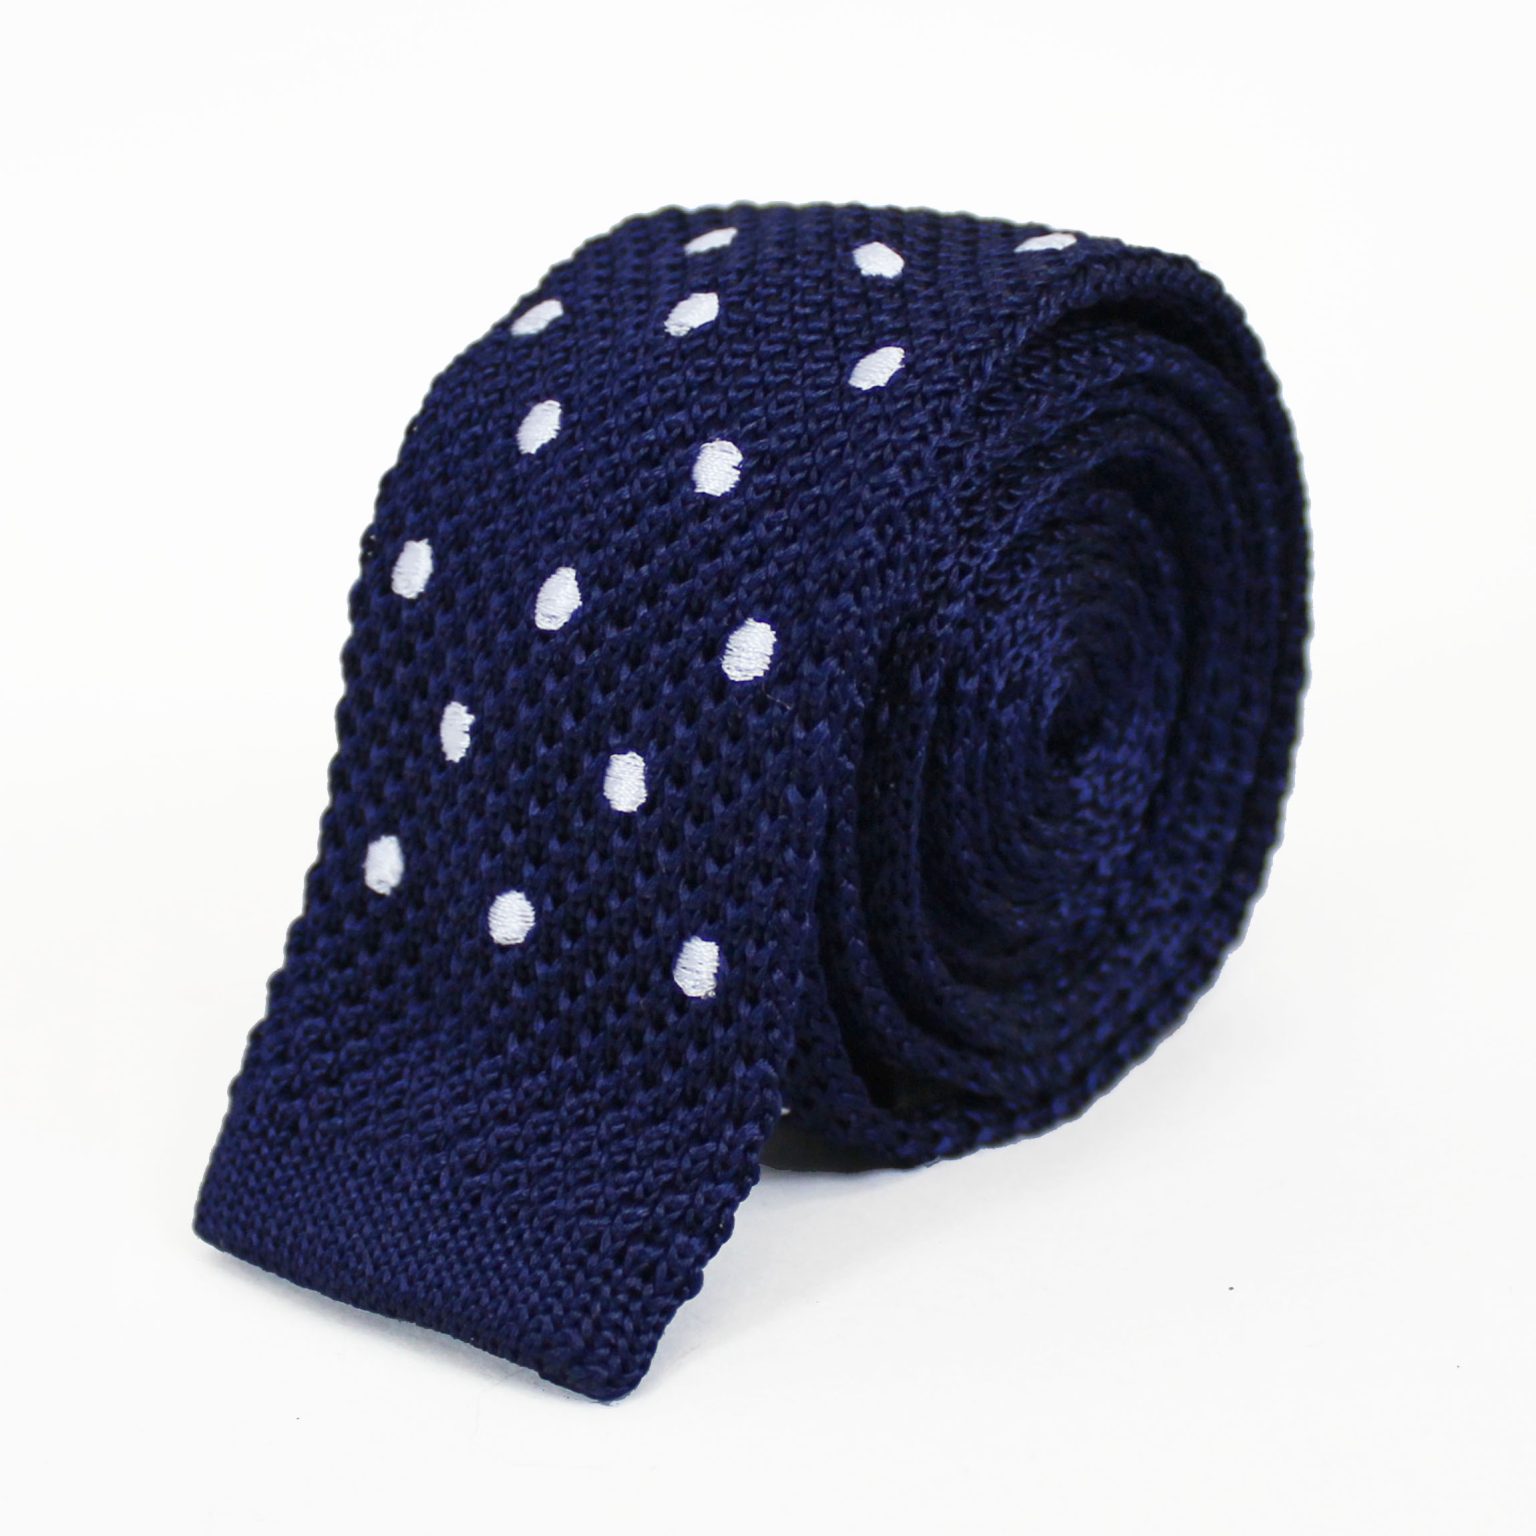 Tootal knitted silk Navy Polka tie - Jump The Gun